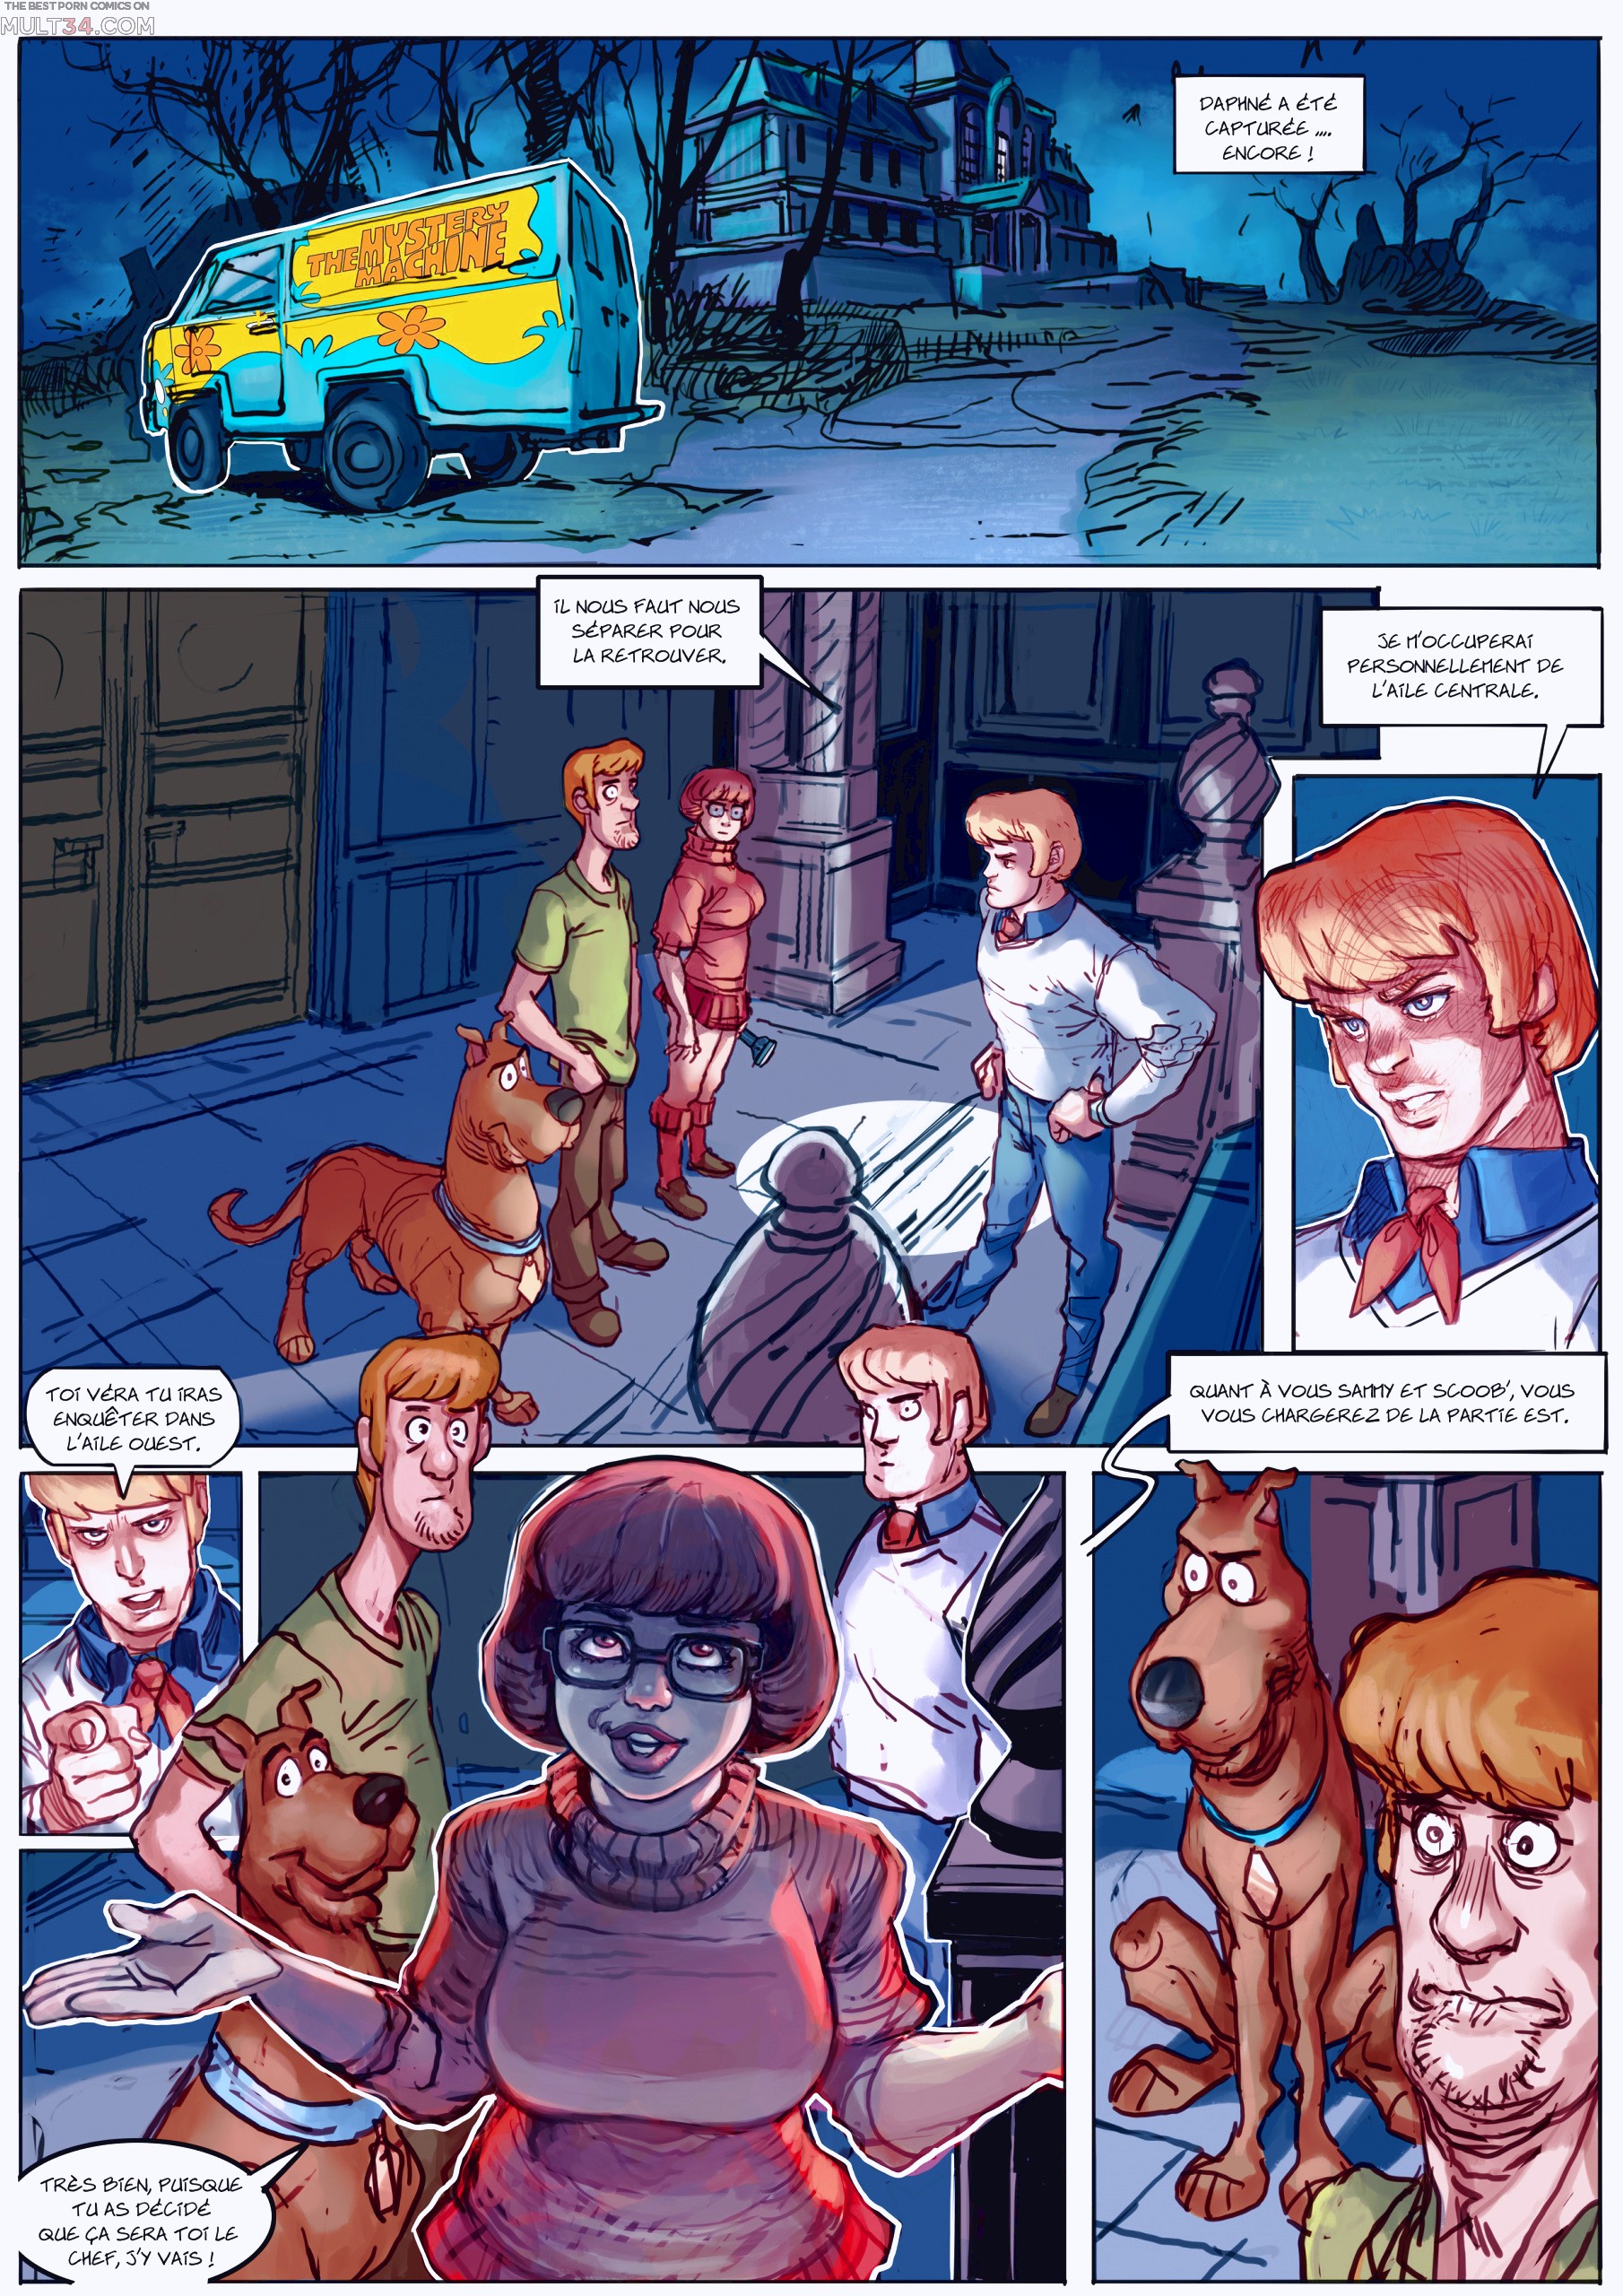 Scooby doo porn comic strips